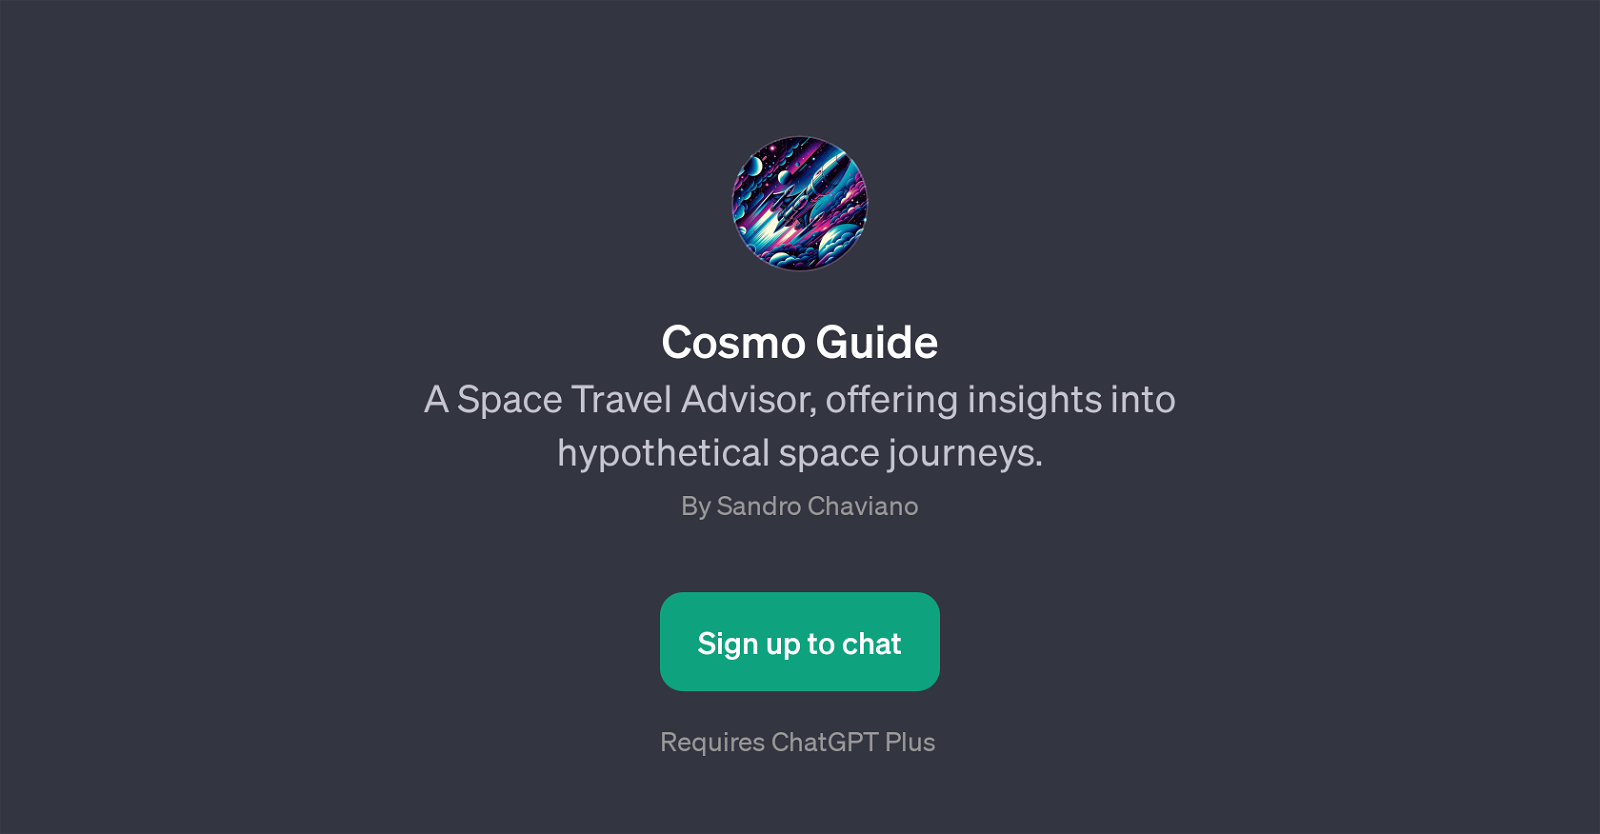 Cosmo Guide website